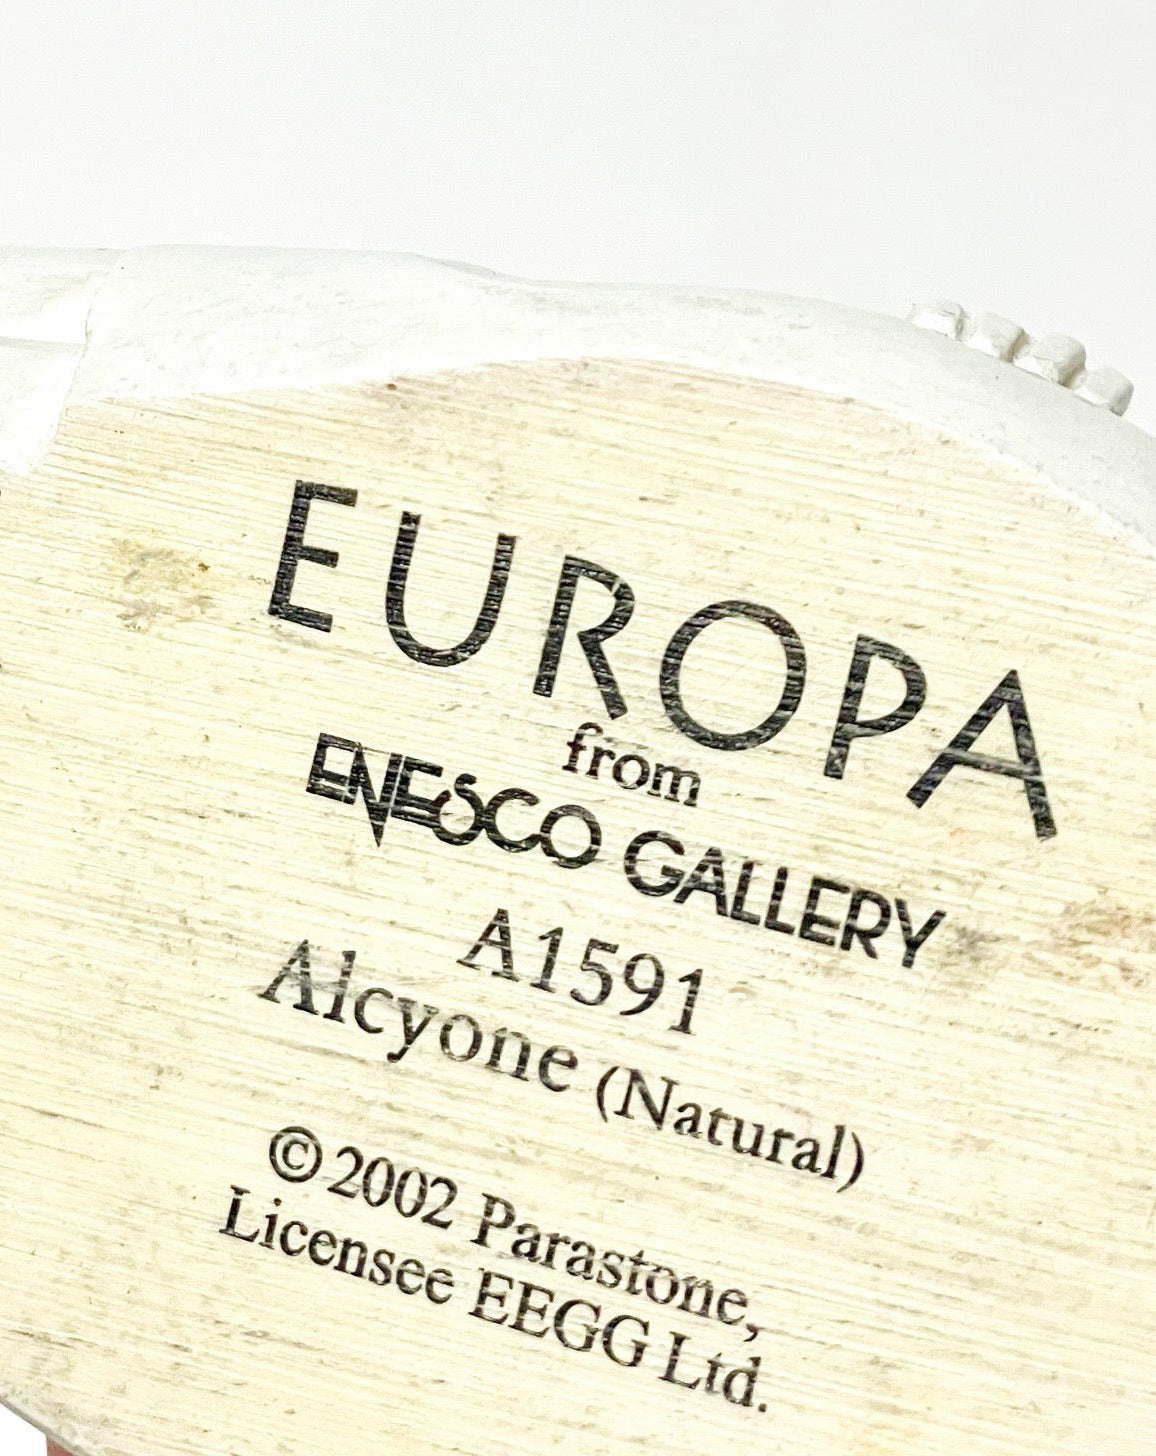 Beeld- Europa from Enesco Gallery A1591